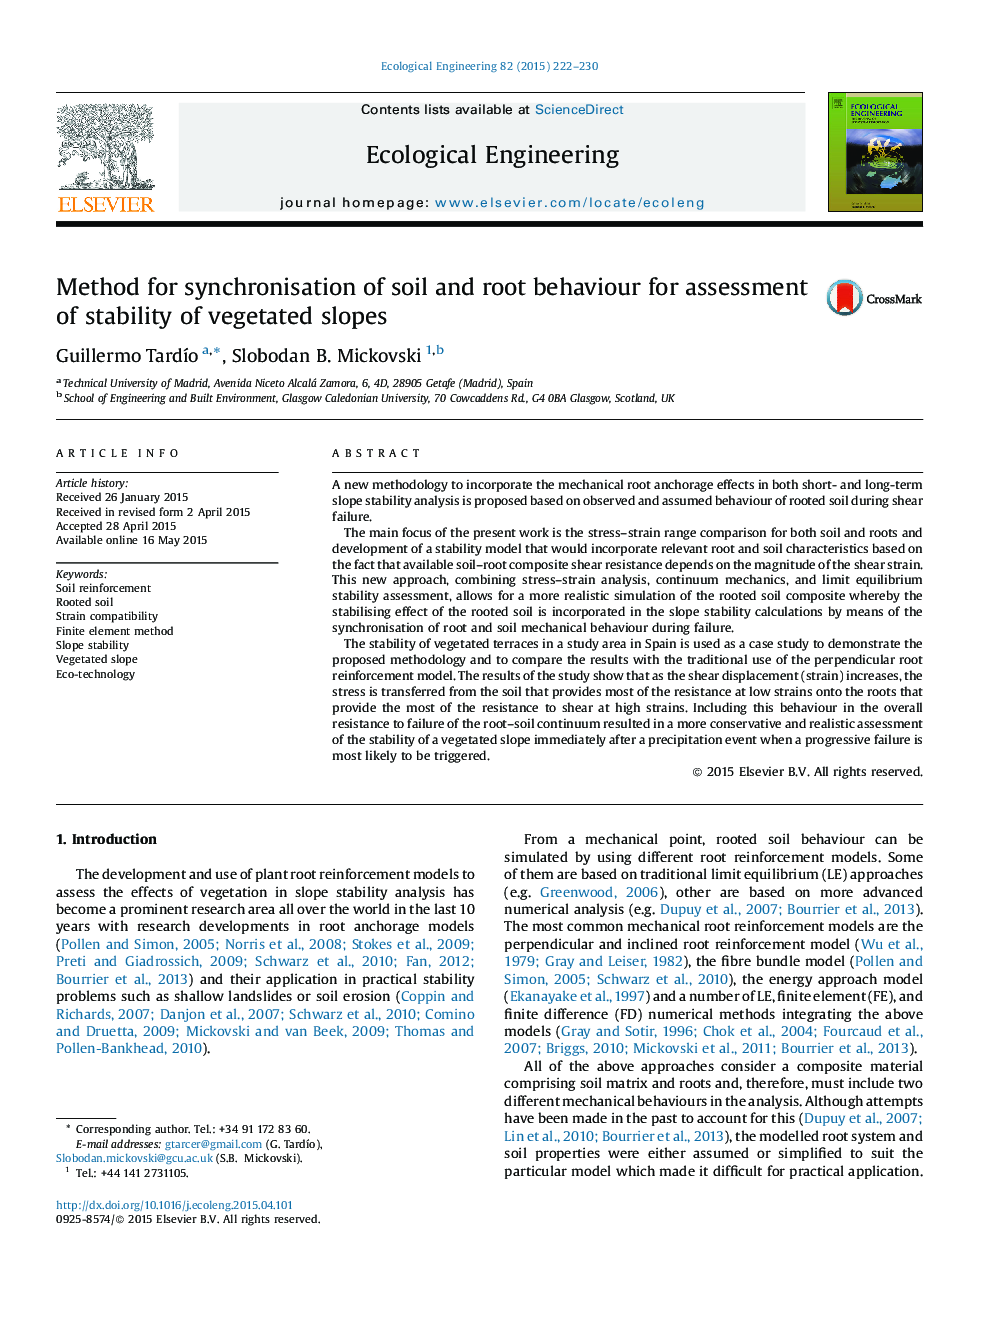 Method for synchronisation of soil and root behaviour for assessment of stability of vegetated slopes